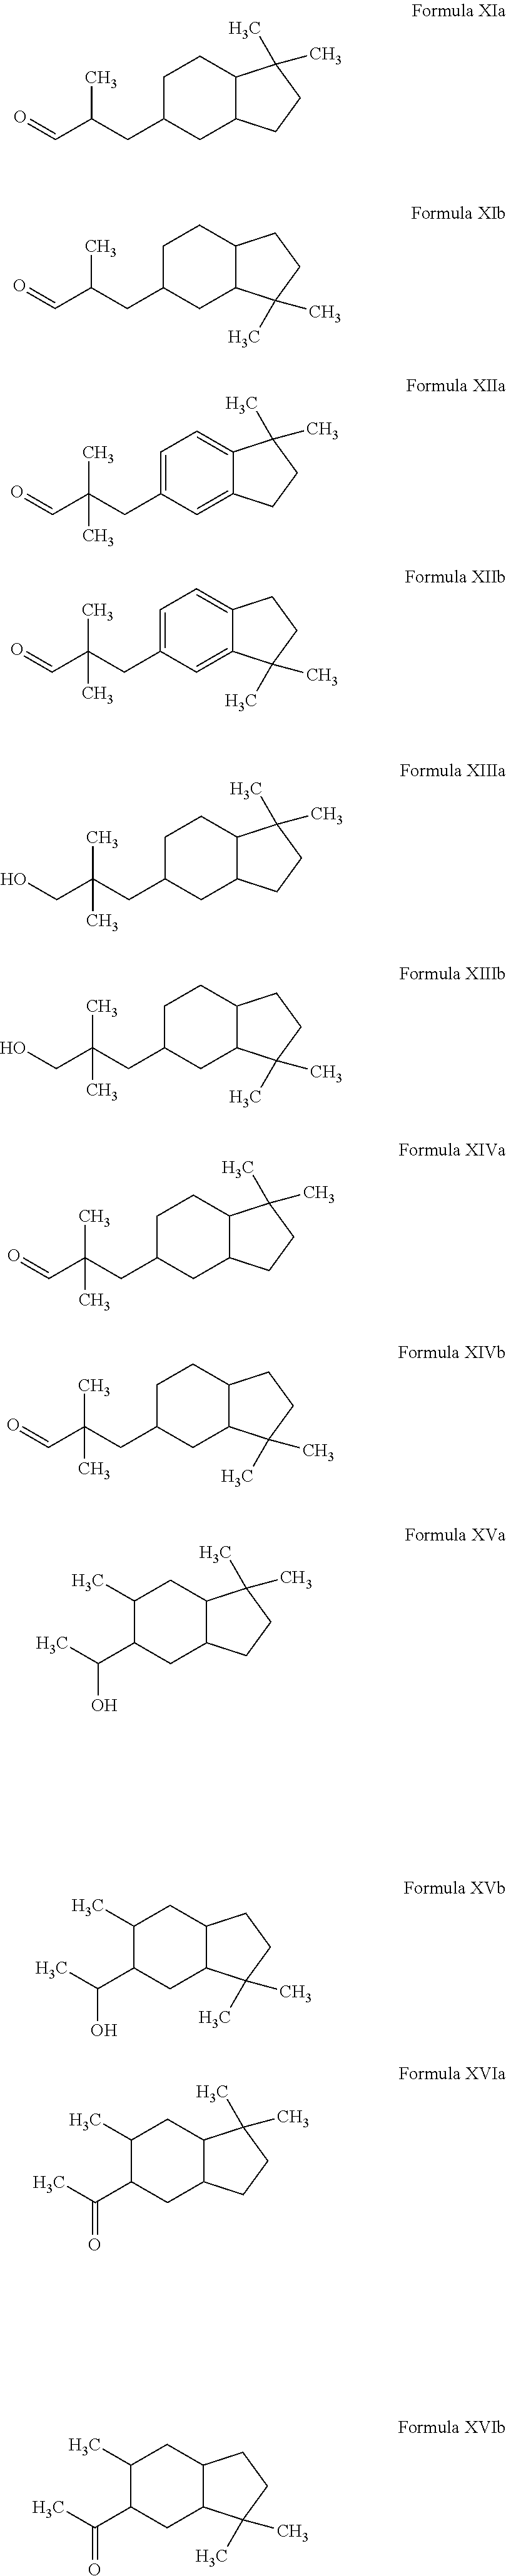 Novel octahydroindenyl propanal compounds